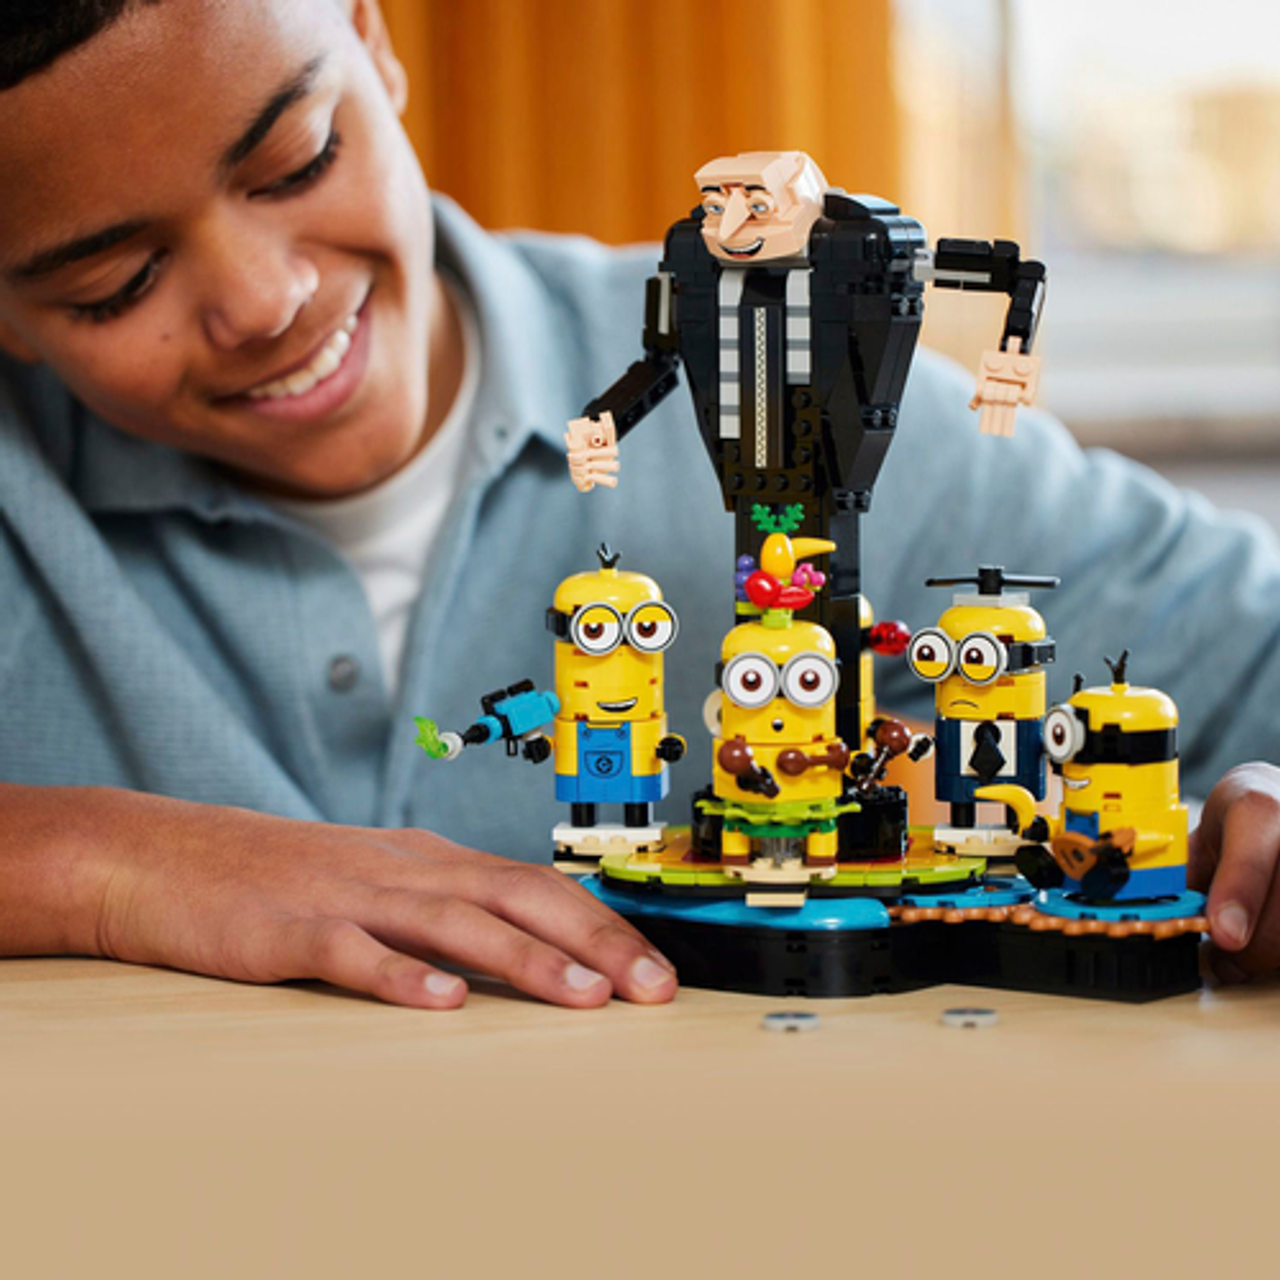 LEGO - Despicable Me 4 Brick-Built Gru and Minions Toy Figure Set 75582